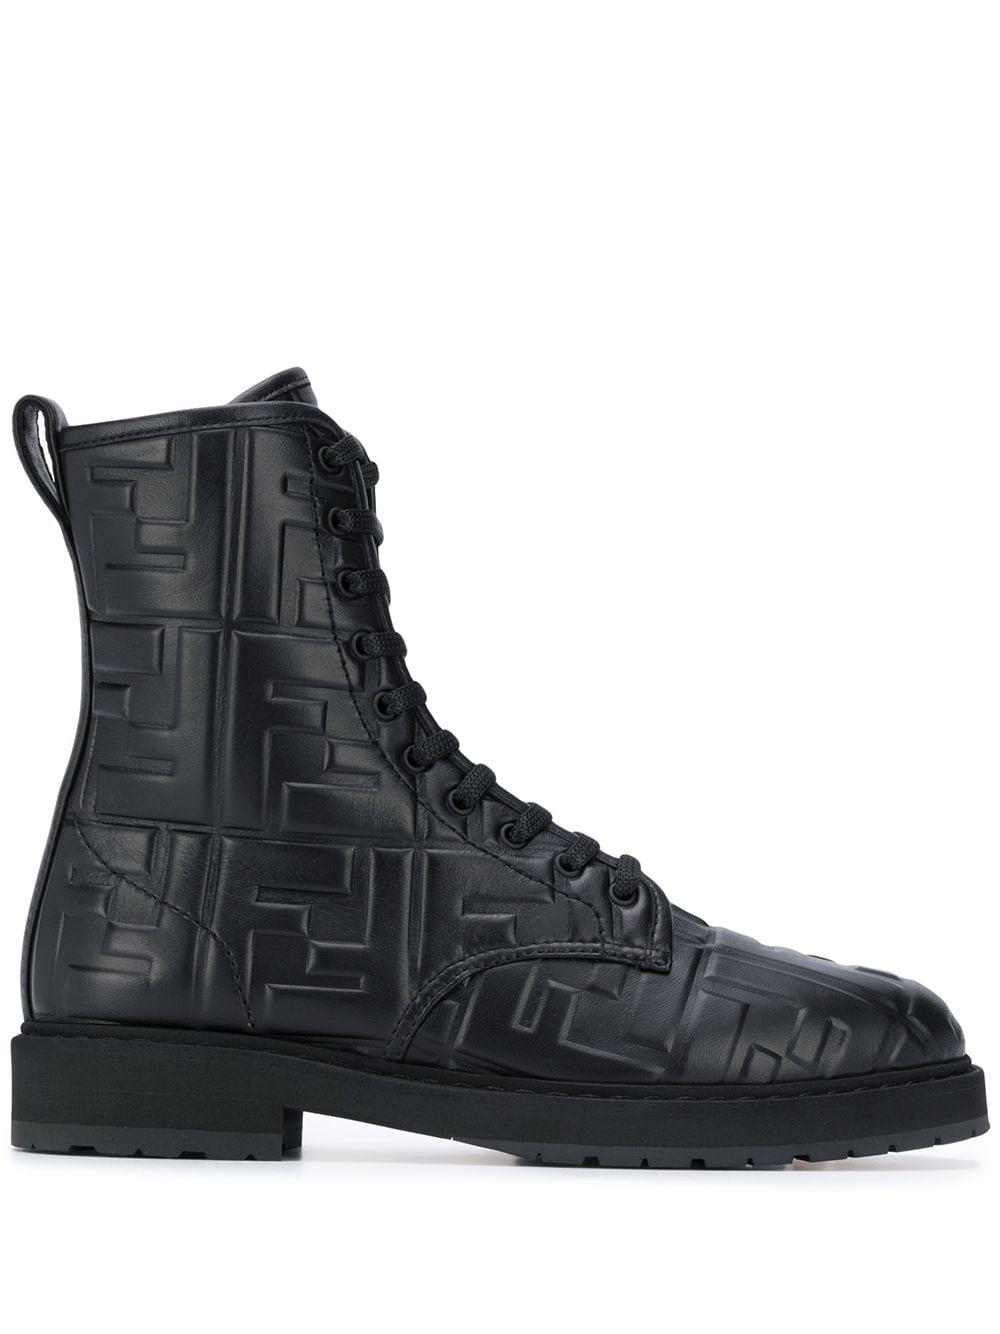 Fendi Ff Logo Combat Boots in Black | Lyst